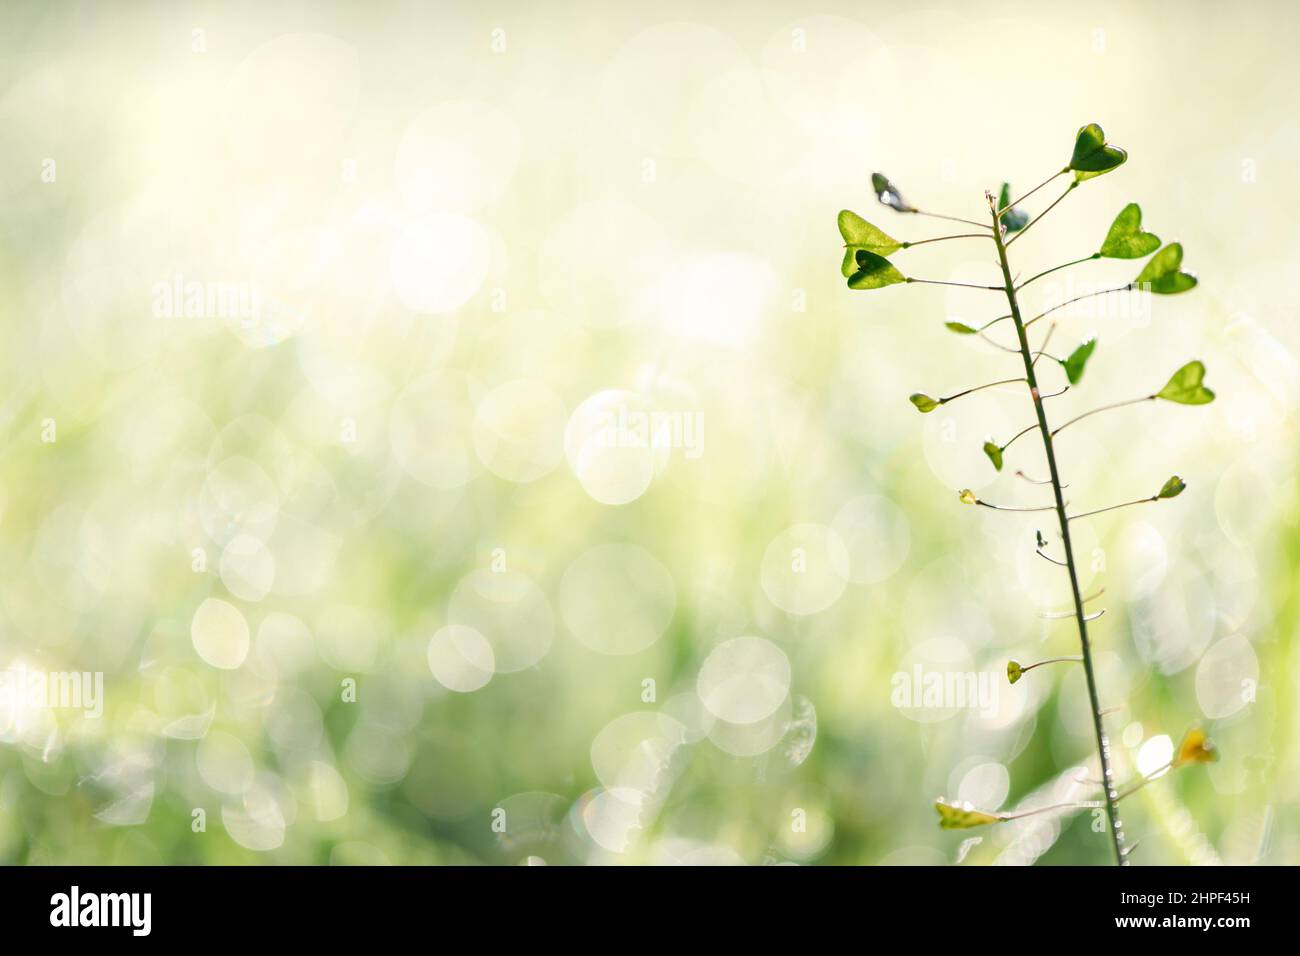 Shepherd's purse (Capsella bursa-pastoris) grass plant with abstract bokeh background, selective focus Stock Photo